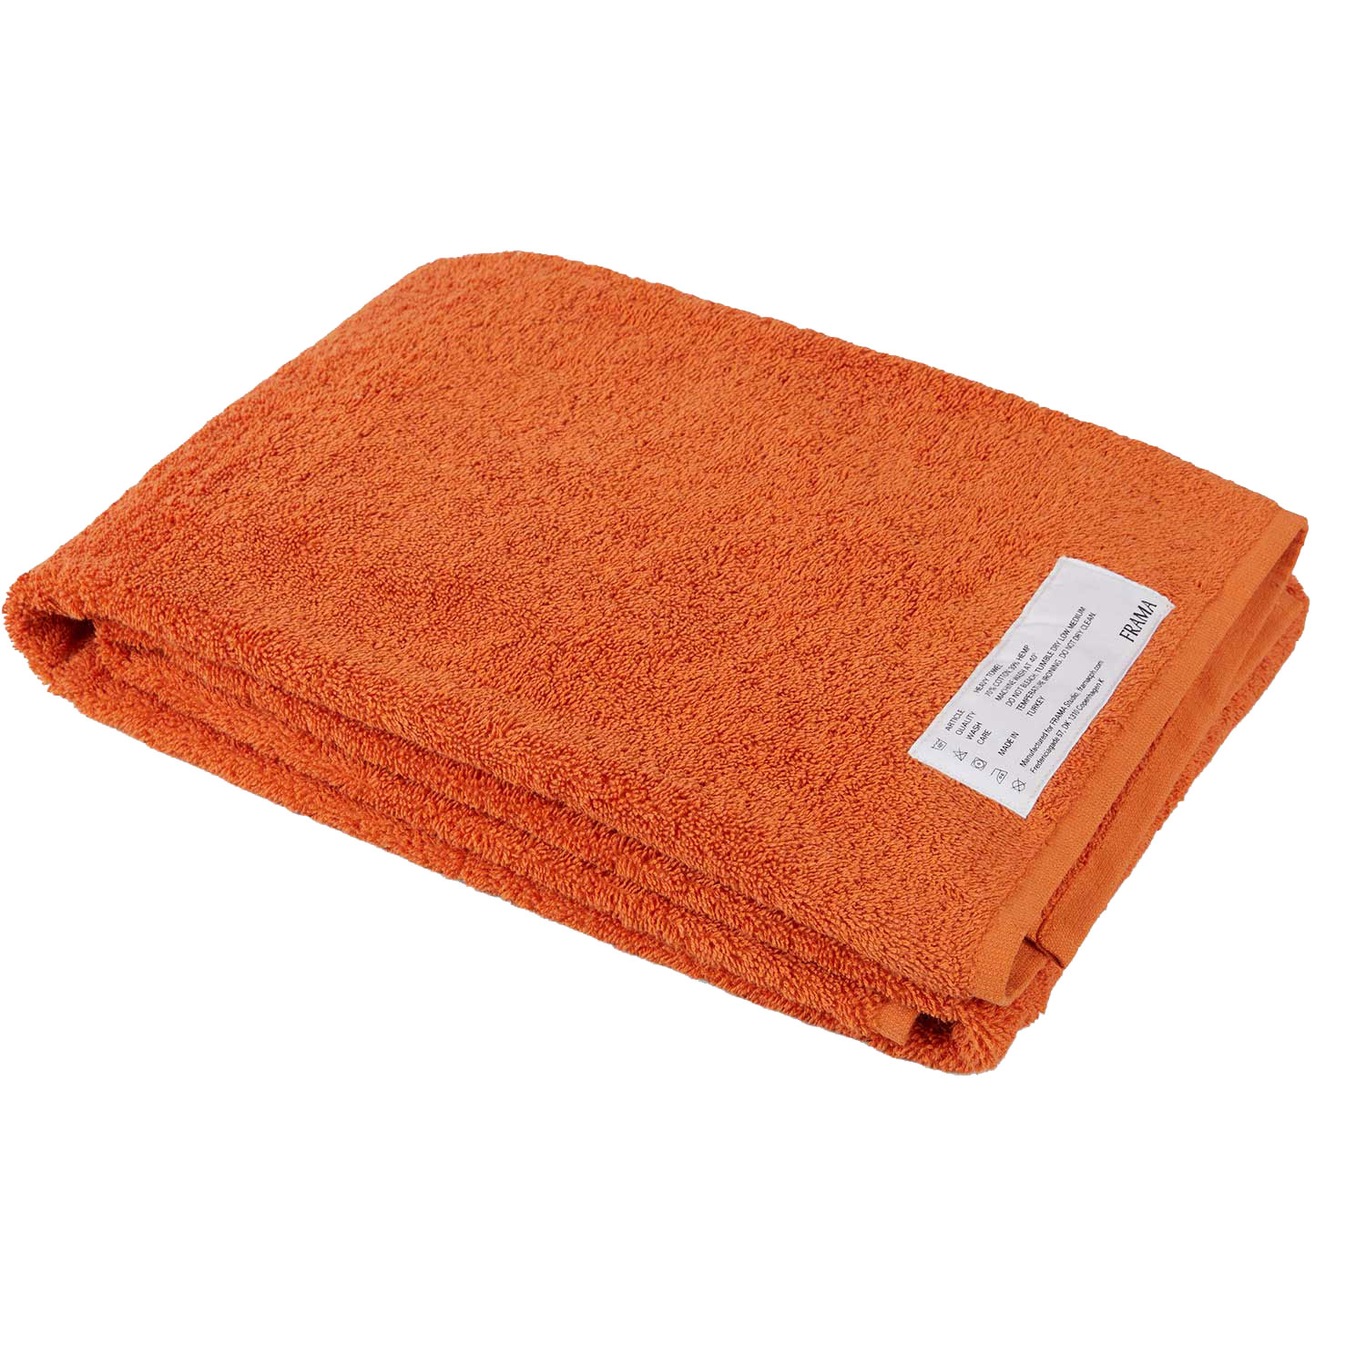 Heavy Towel Kylpypyyhe 70x140 cm, Burnt Orange